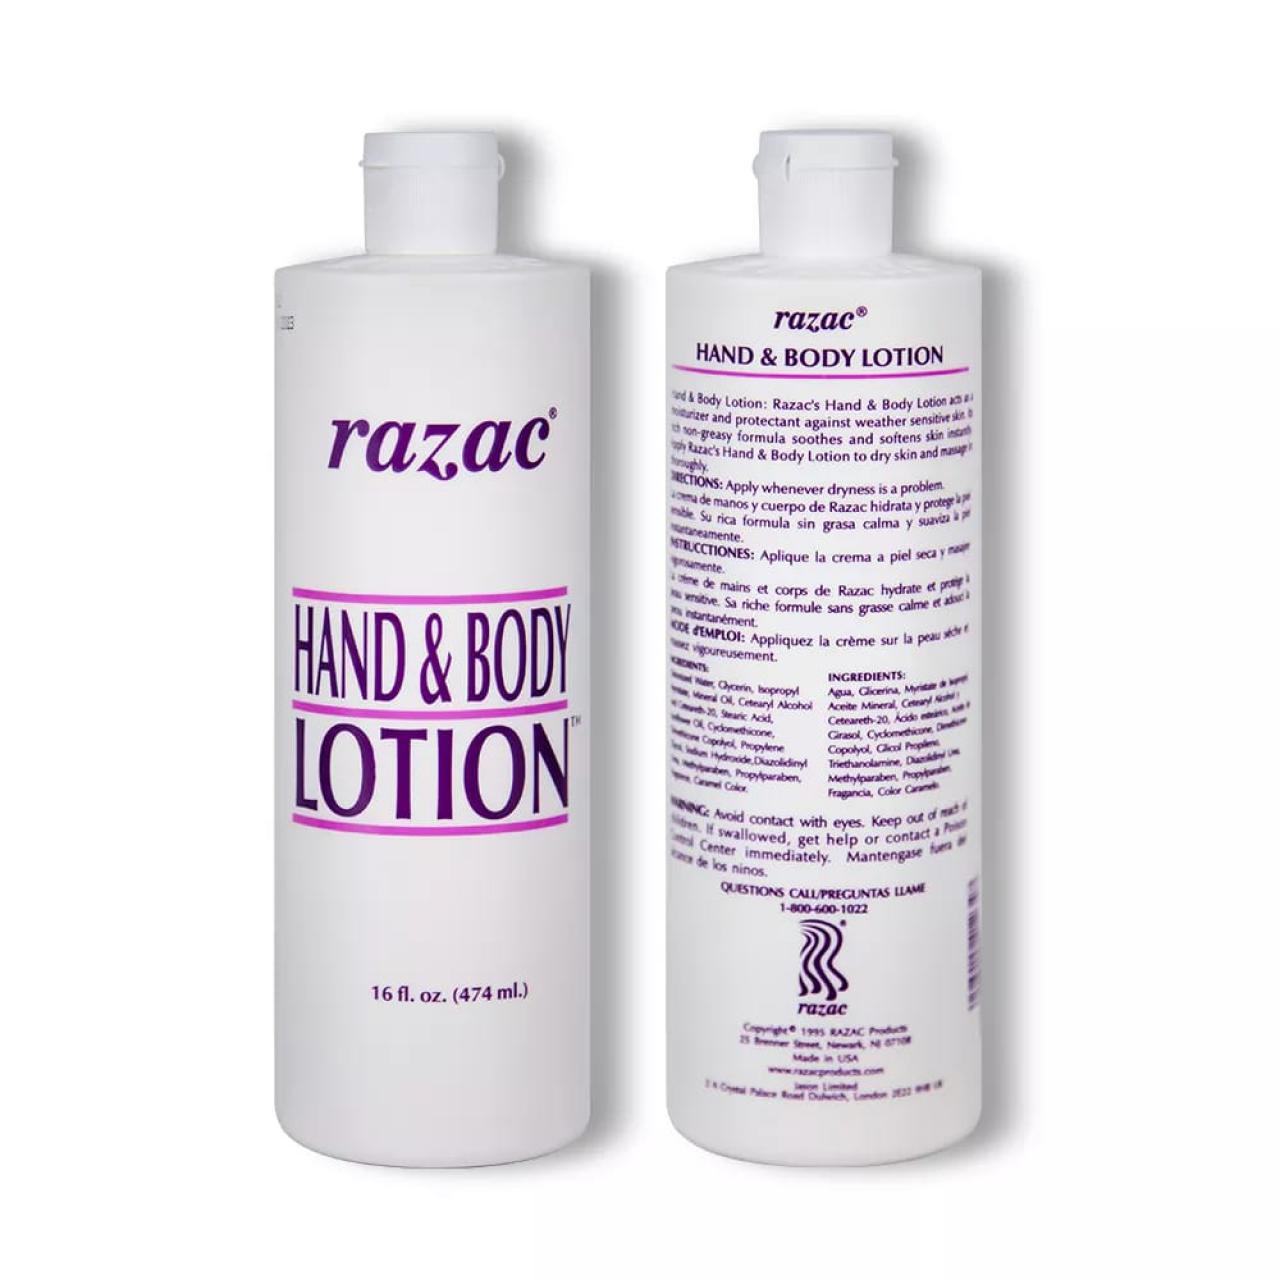 Razac hand and bodylotion